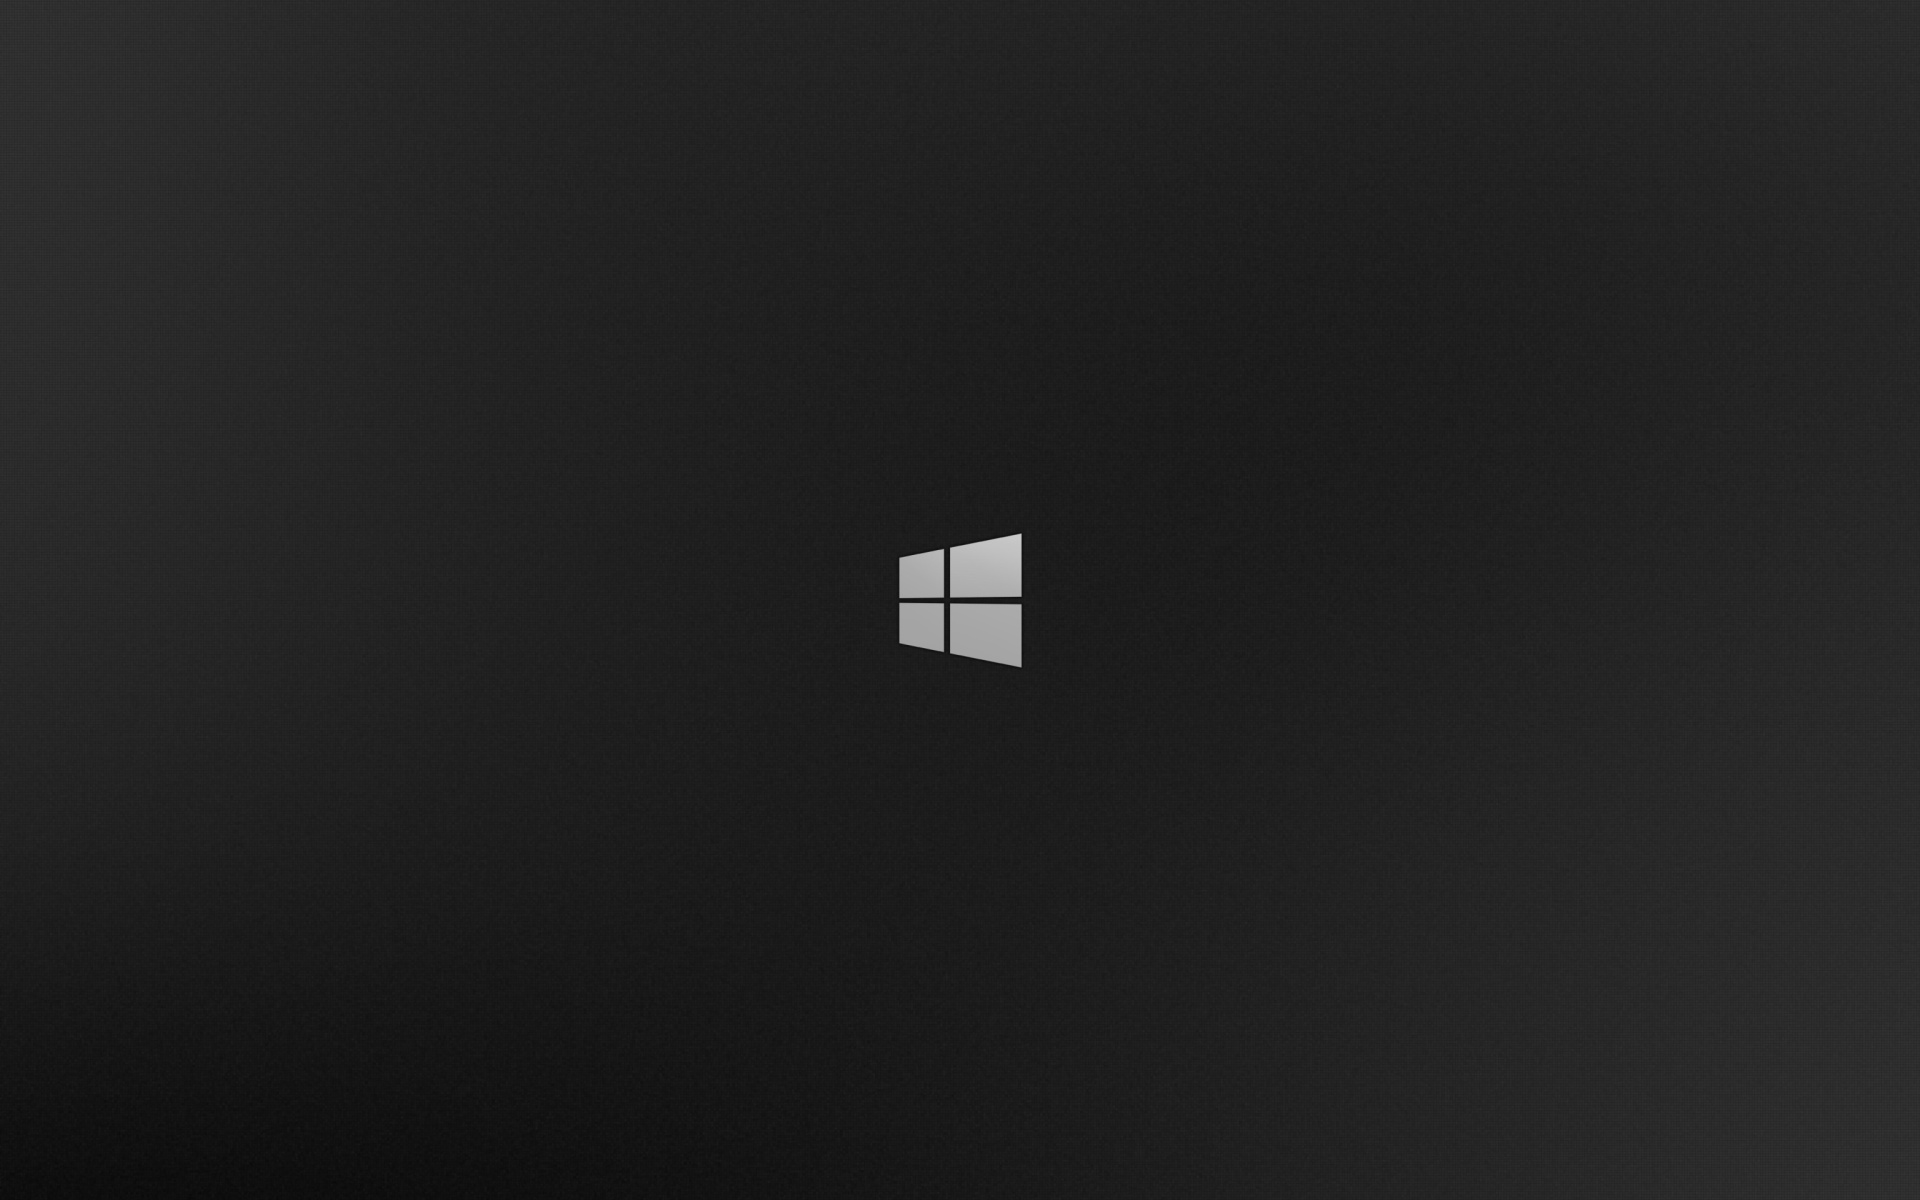 Windows 8 Black Logo Wallpaper for Widescreen Desktop PC 1920x1080 Full HD Full Hd Wallpapers For Windows 8 1920x1080